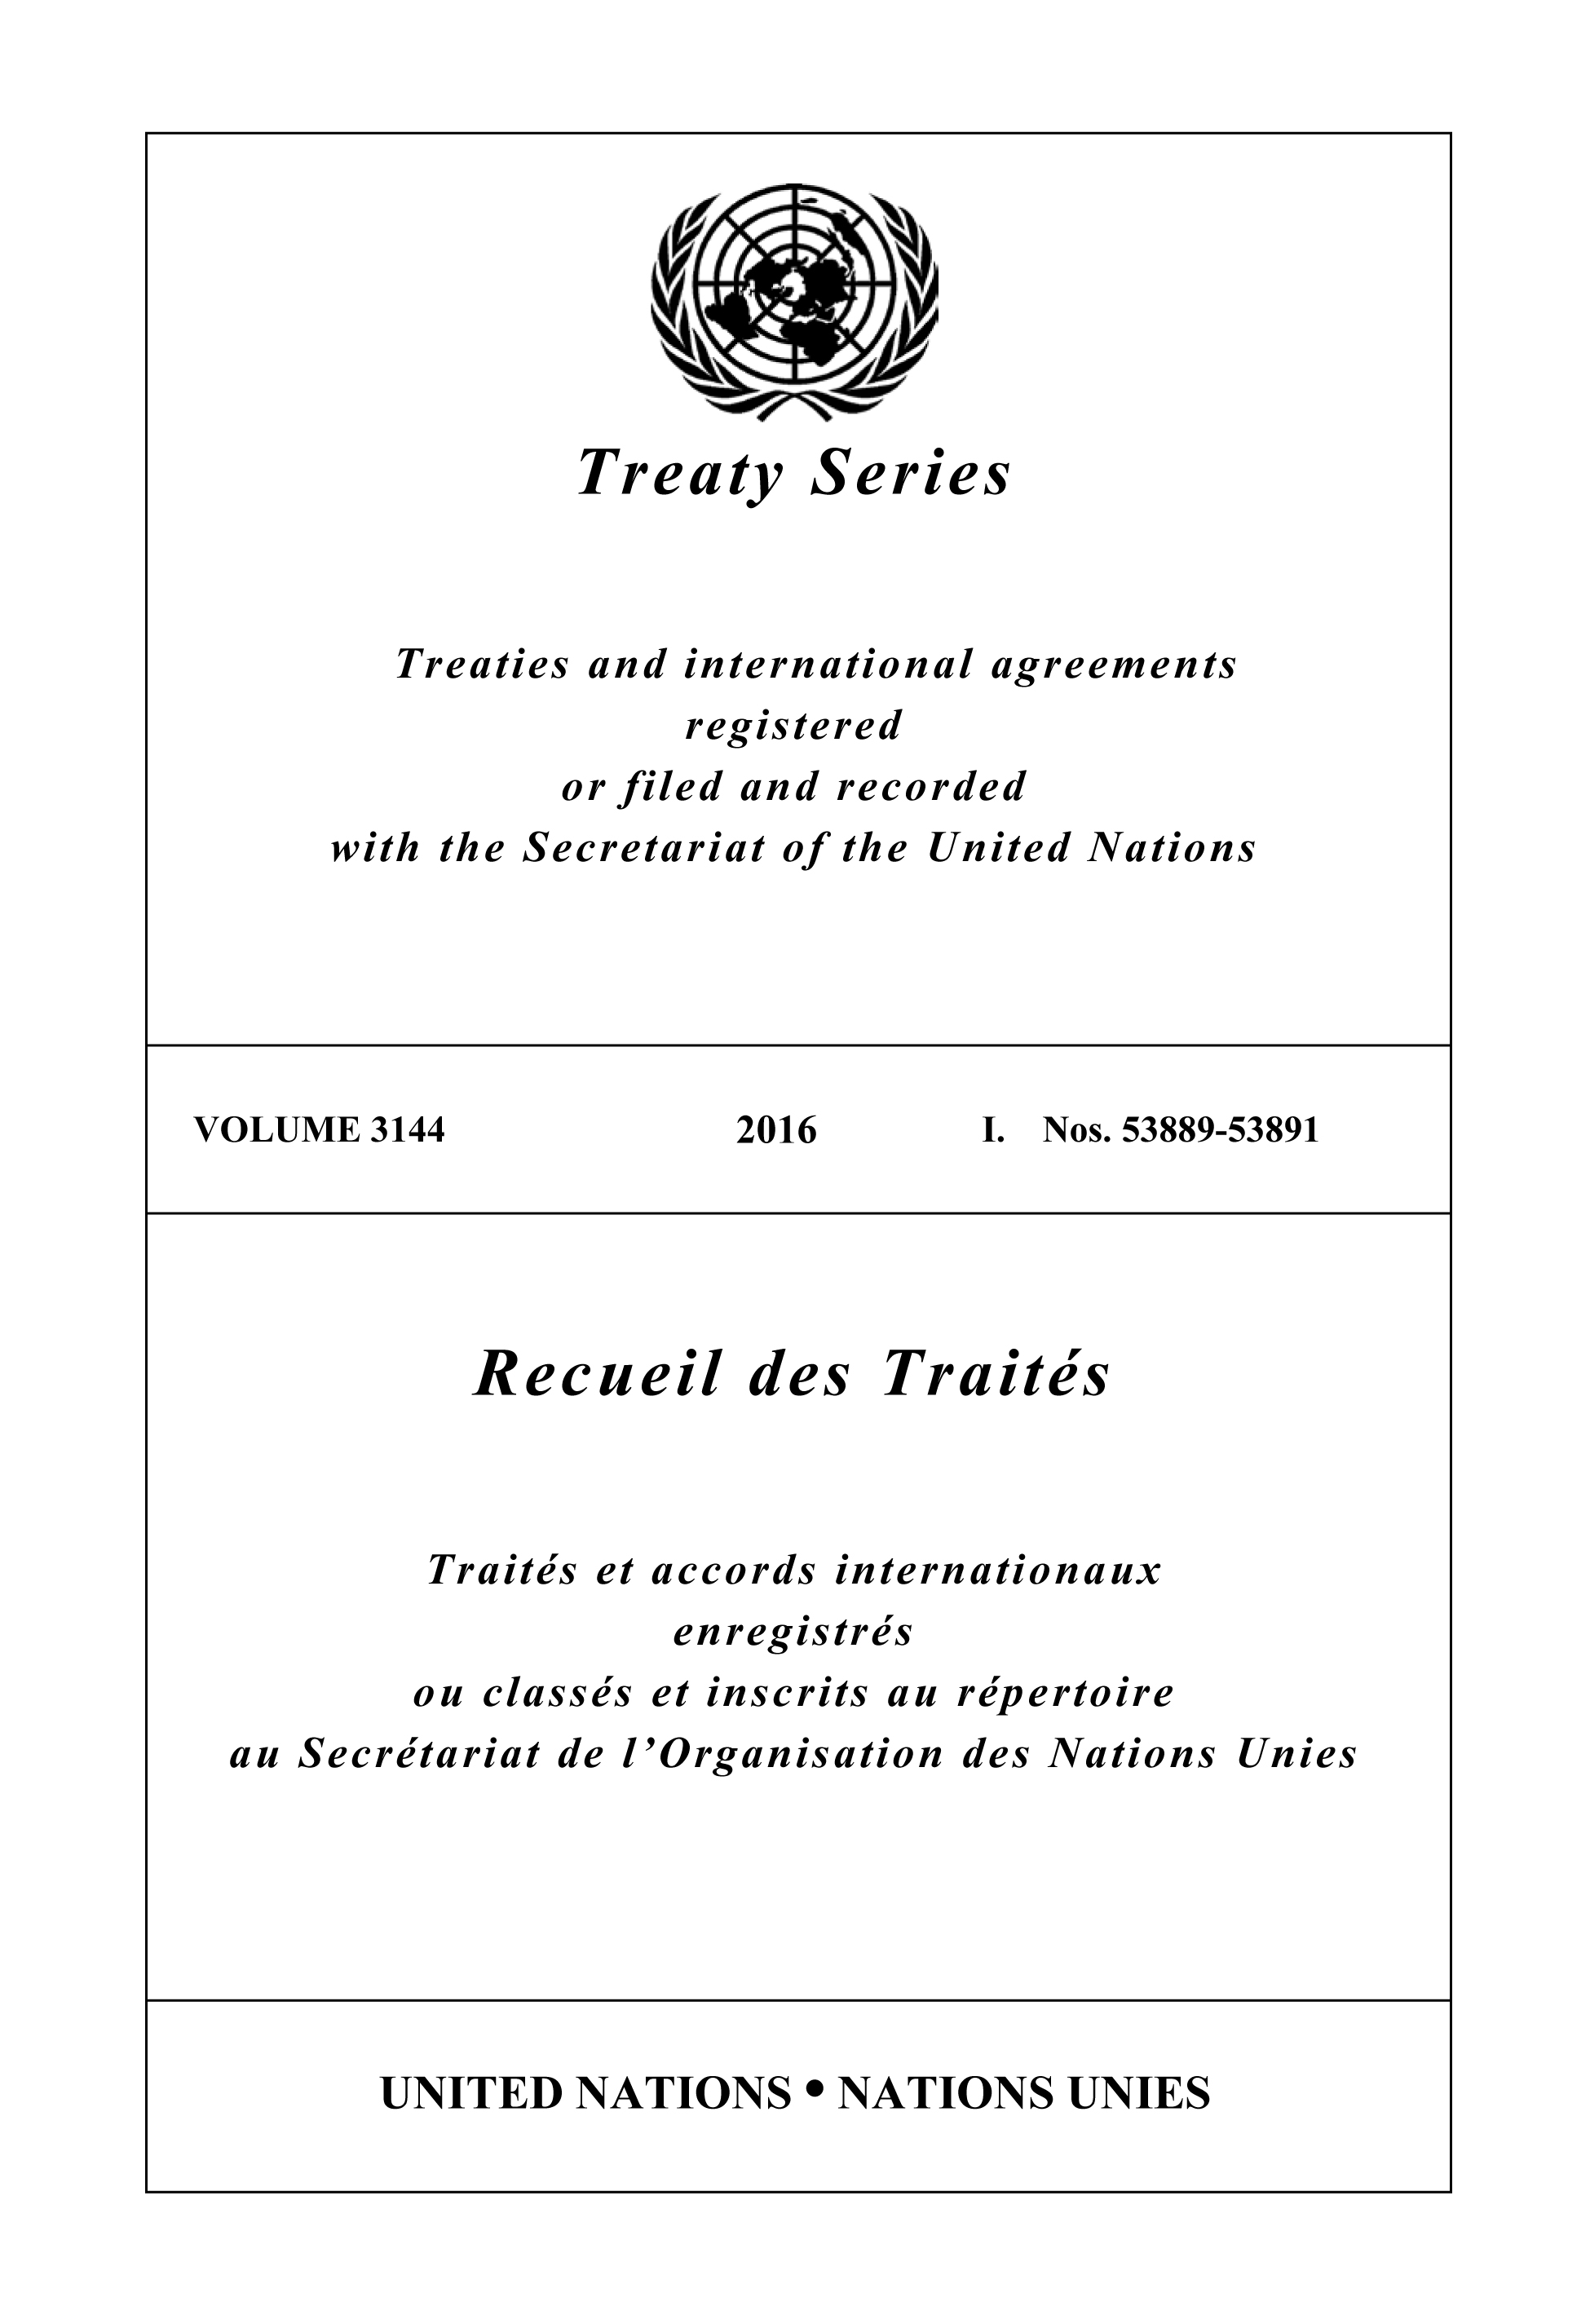 image of Treaty Series 3144